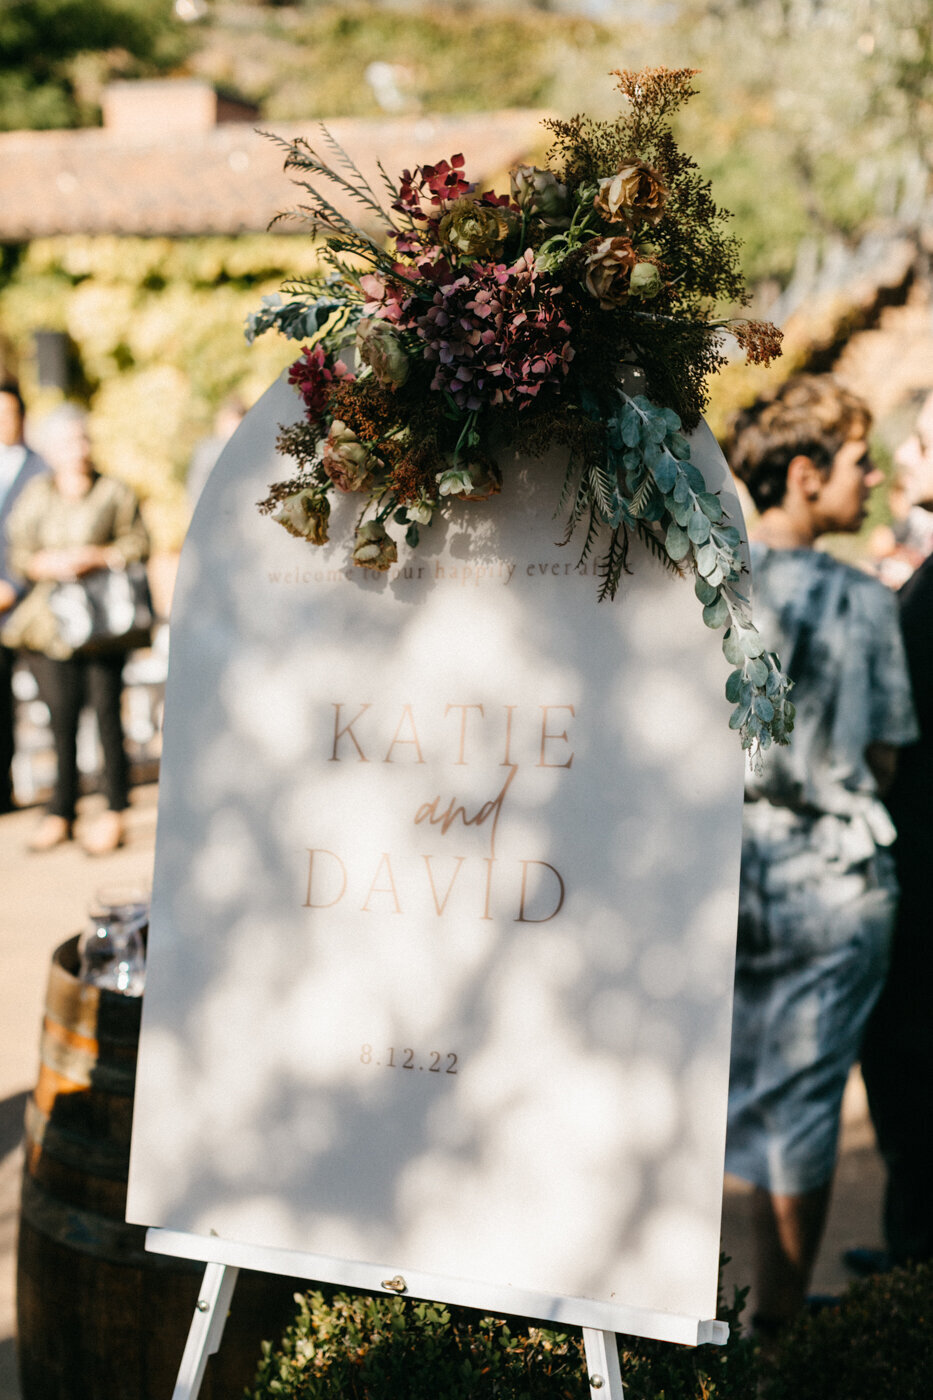 katie-david-wedding-8-12-22-melissa-atle-web-43